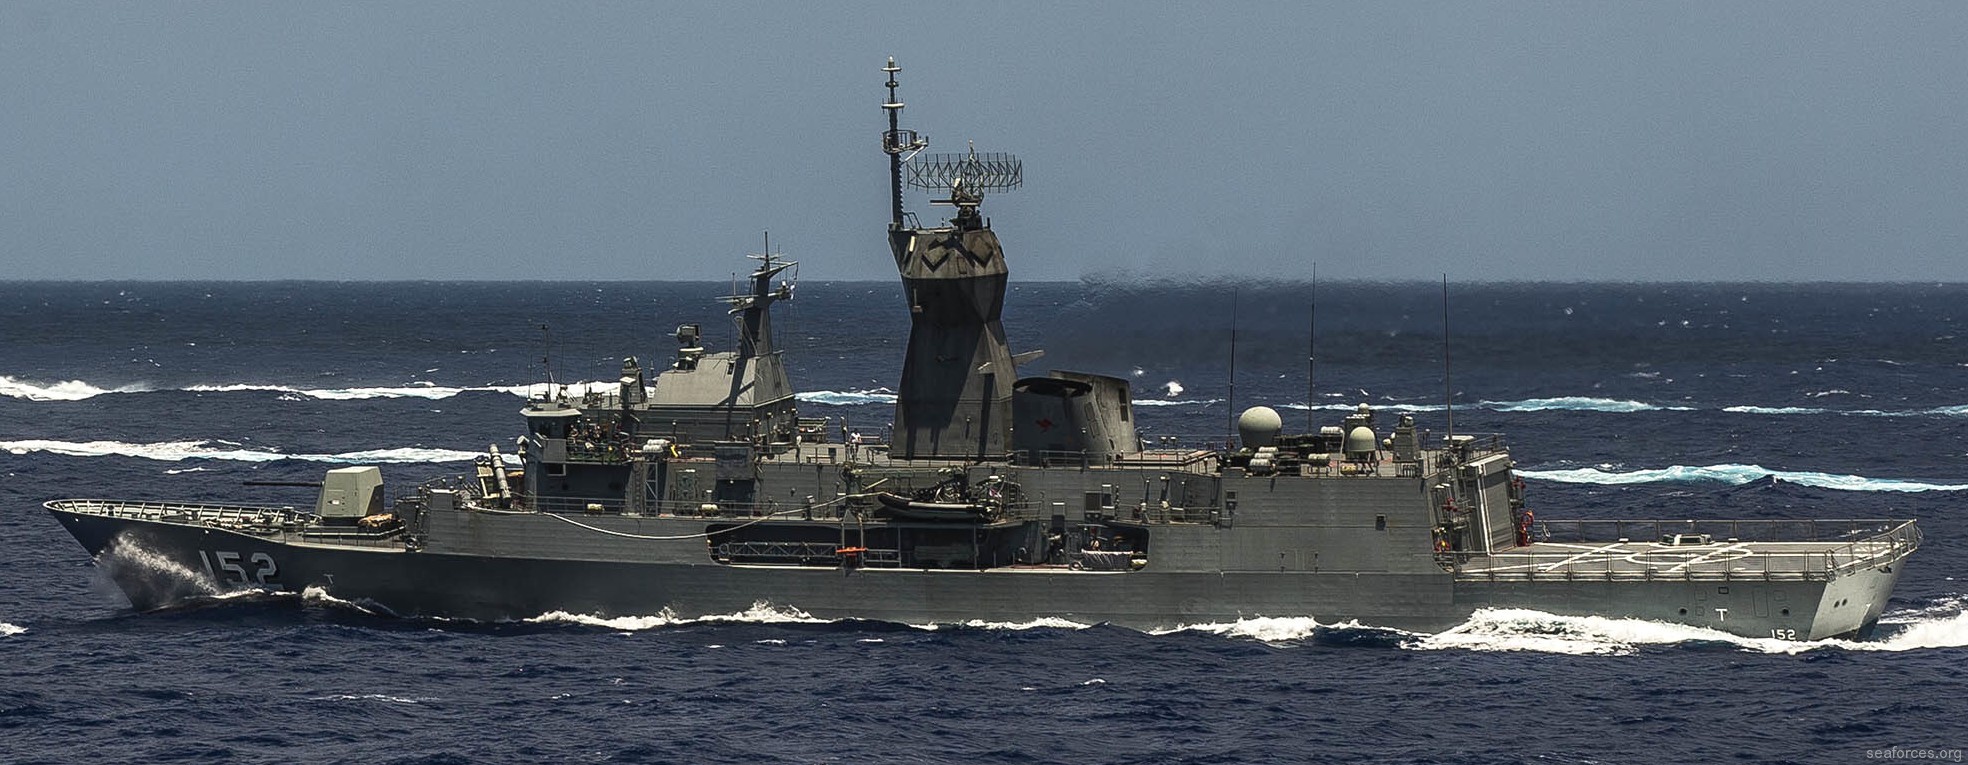 ffh-152 hmas warramunga anzac class frigate royal australian navy 2016 13 exercise rimpac